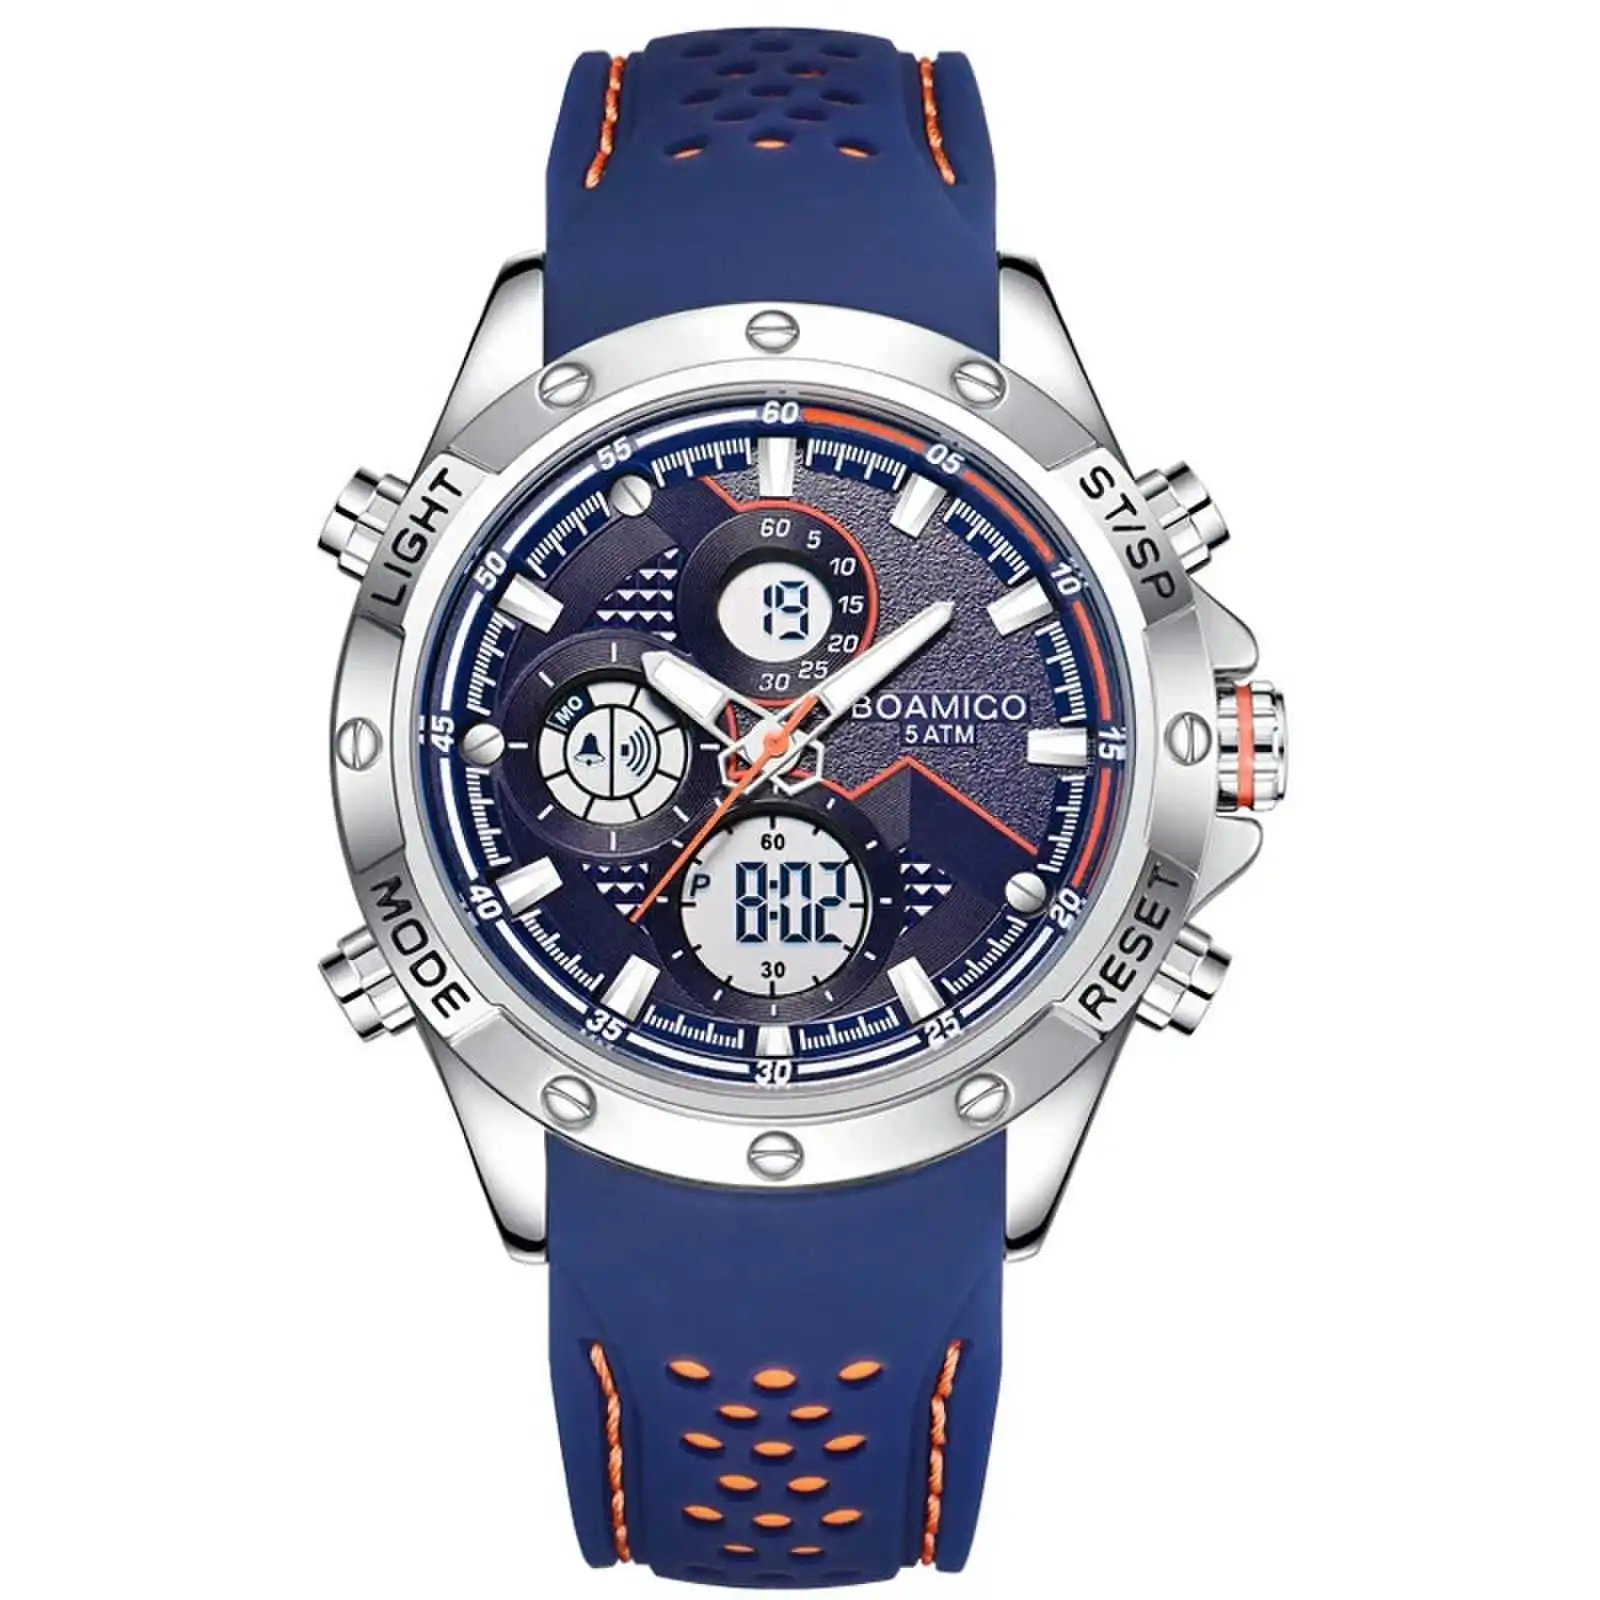 

BOAMIGO Luxury Fashion Casual Blue Watch Men Military Digital Analog Quartz Chronograph Rubber Strap Watch Waterproof sport Watc